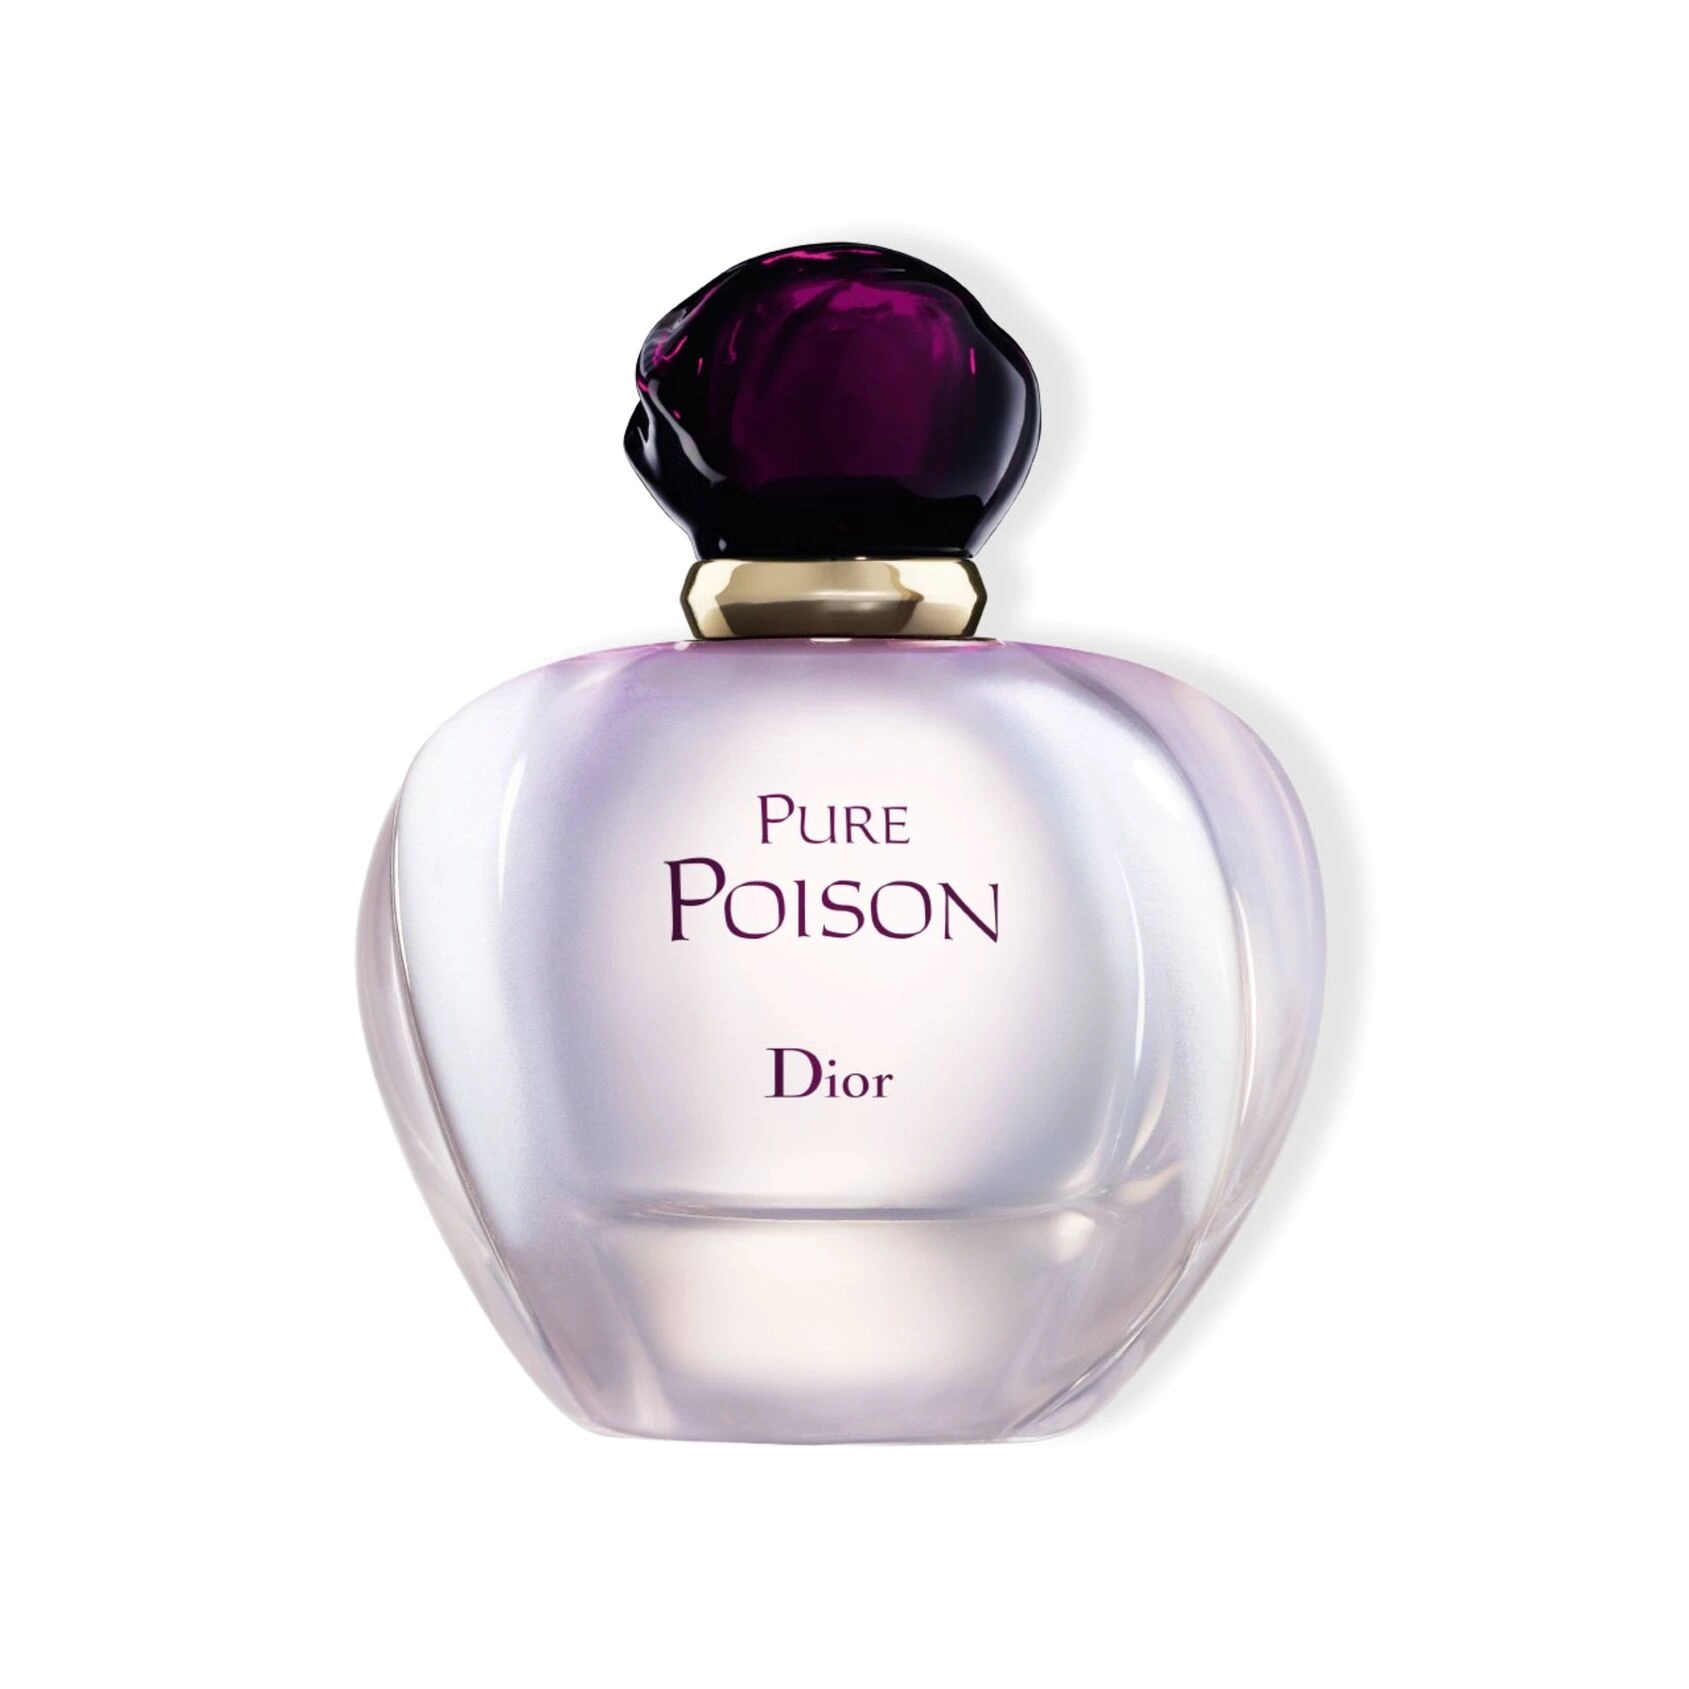 Диор яблоко купить. Christian Dior Pure Poison. Dior Poison Pure - 100 ml EDP. Dior Pure Poison EDP. Christian Dior "Pure Poison" 100 ml.